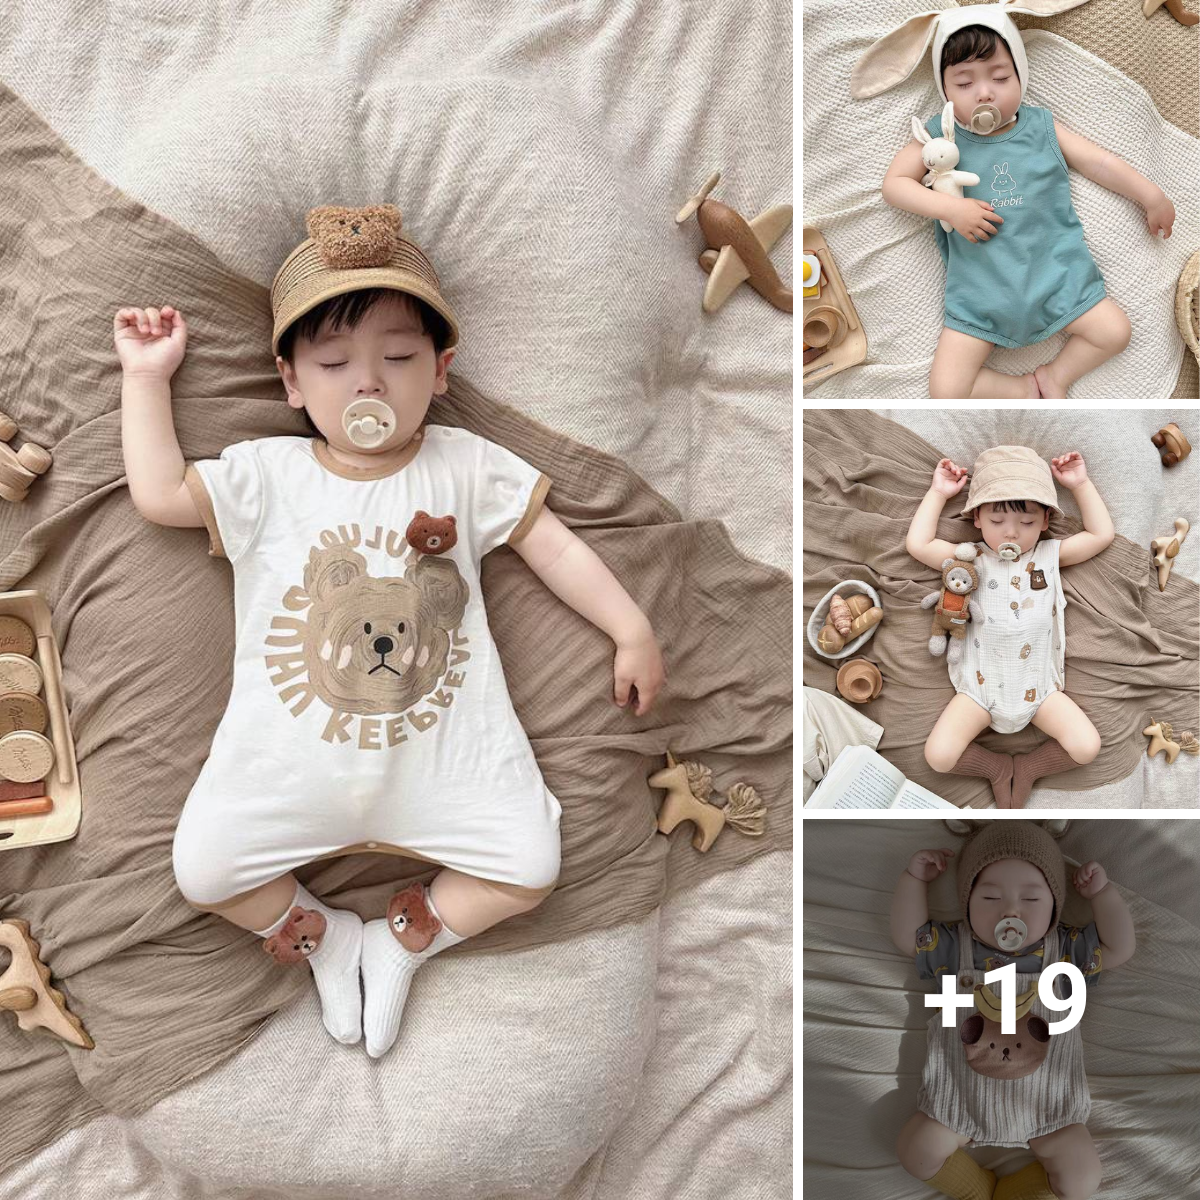 Dream Sweet Dreams: Adorable Cuteness of Sleeping Infants.